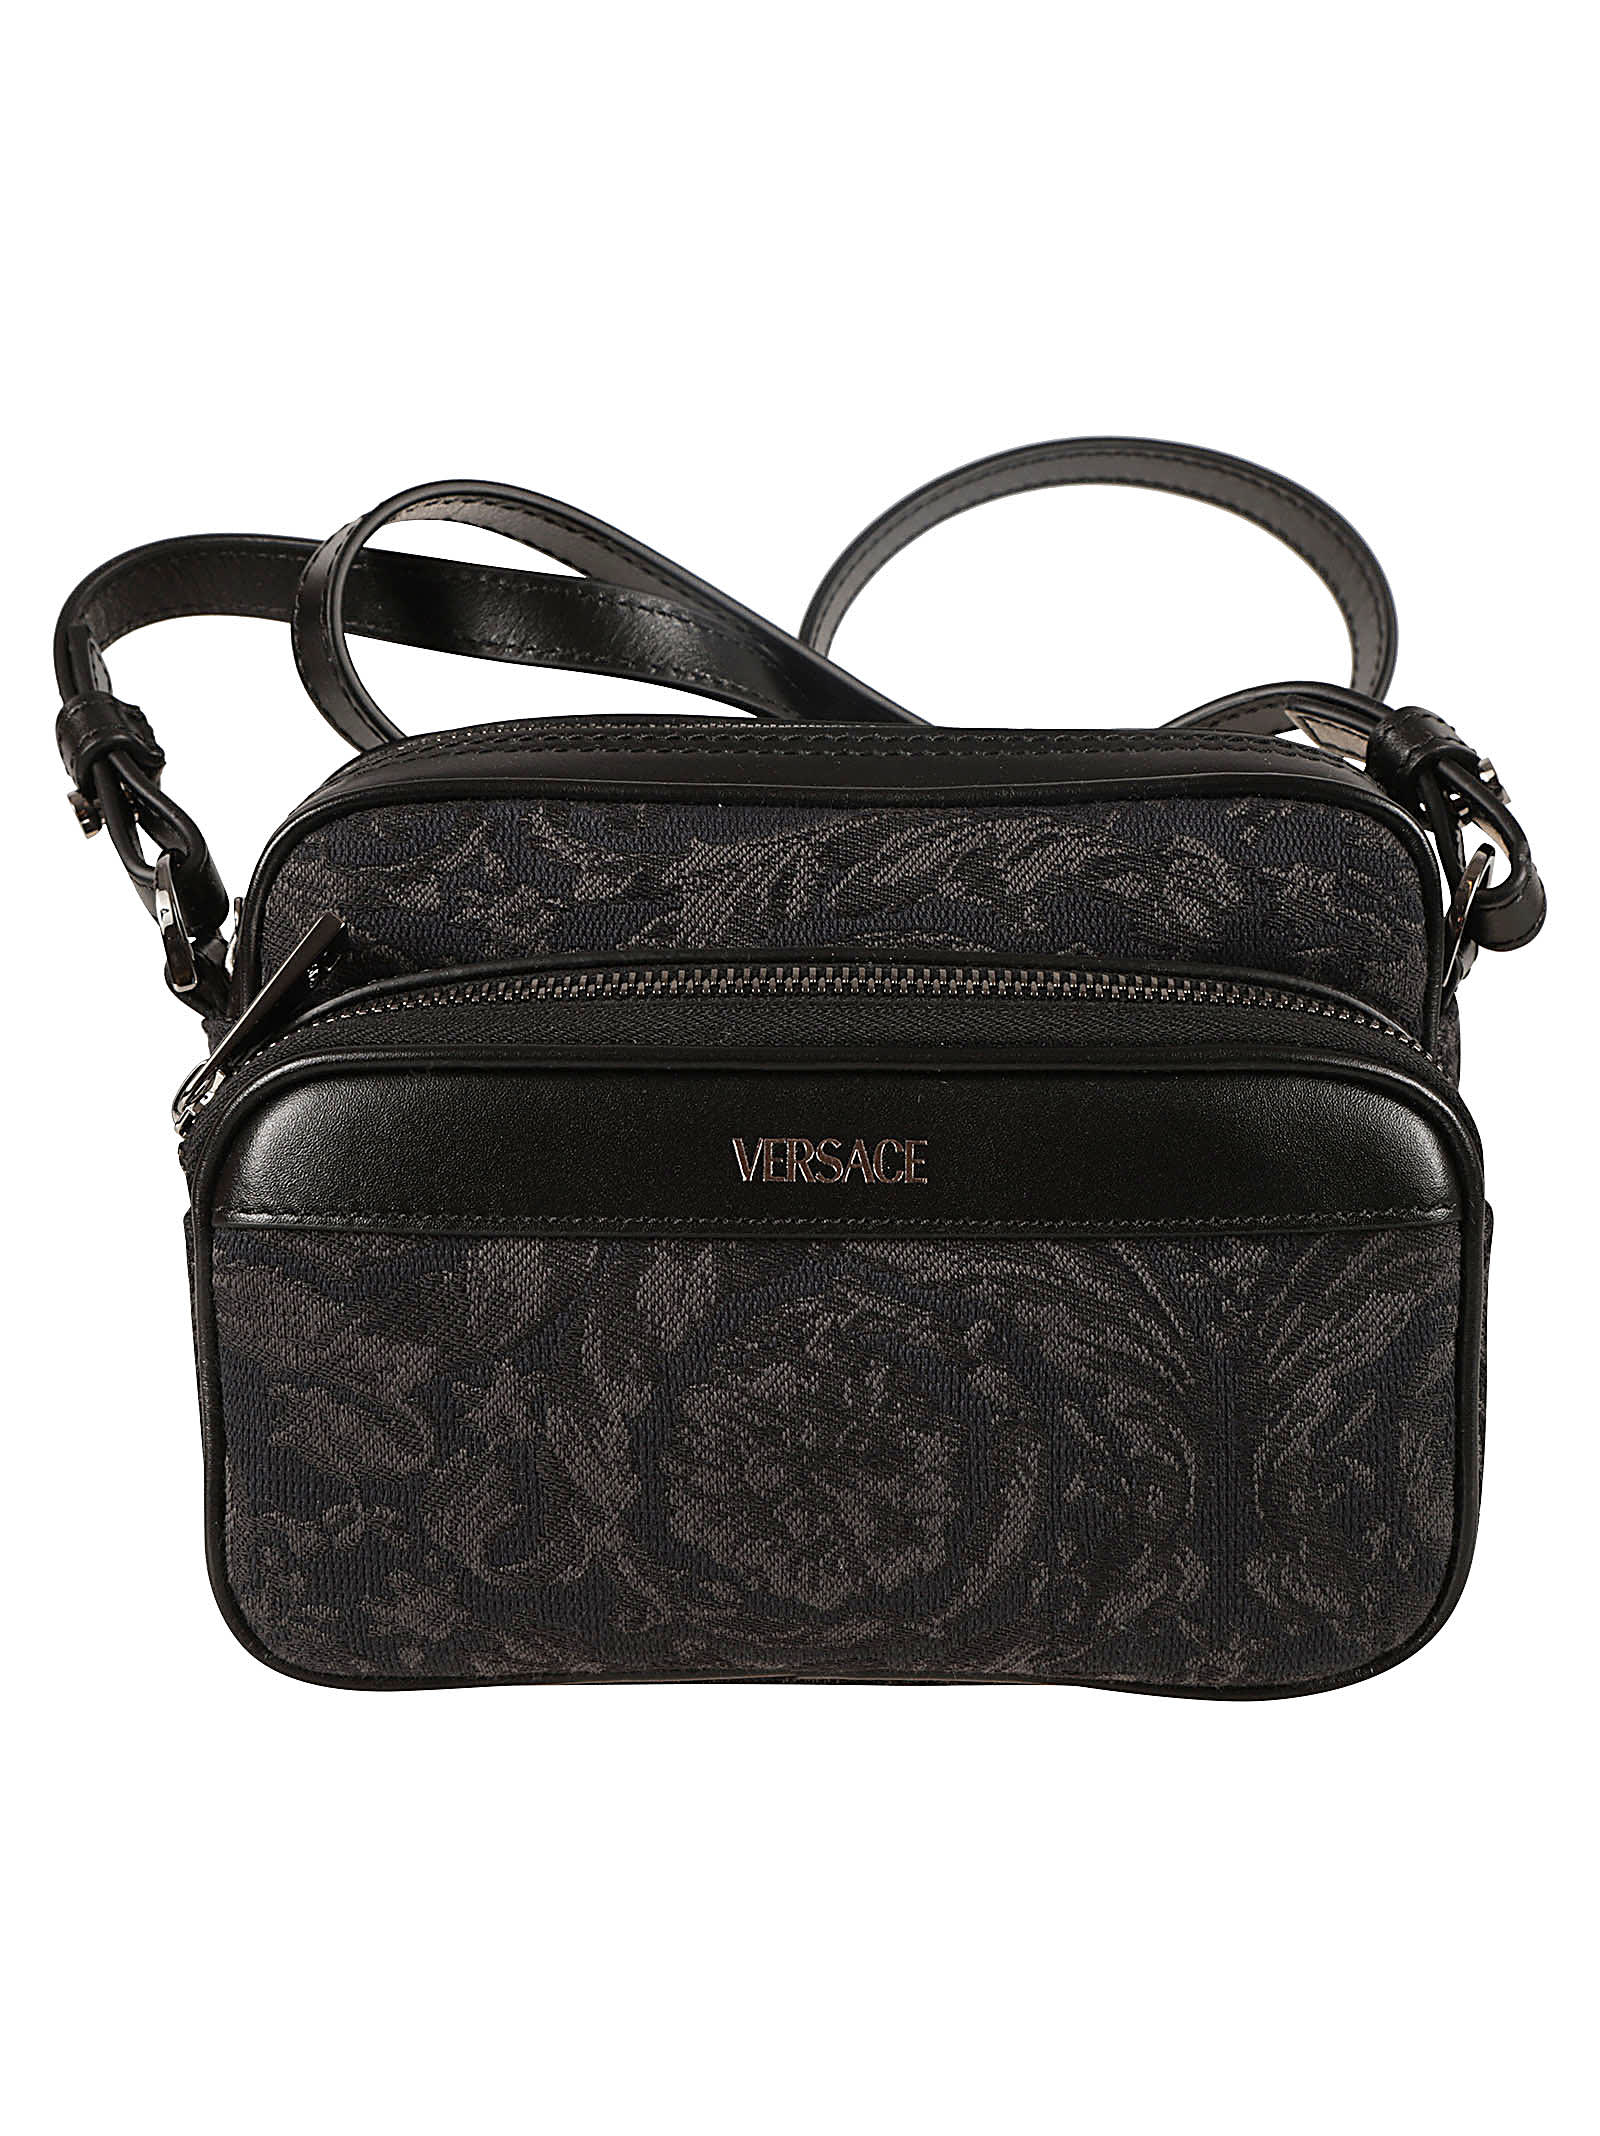 Versace Small Jacquard Crossbody Bag In Blue